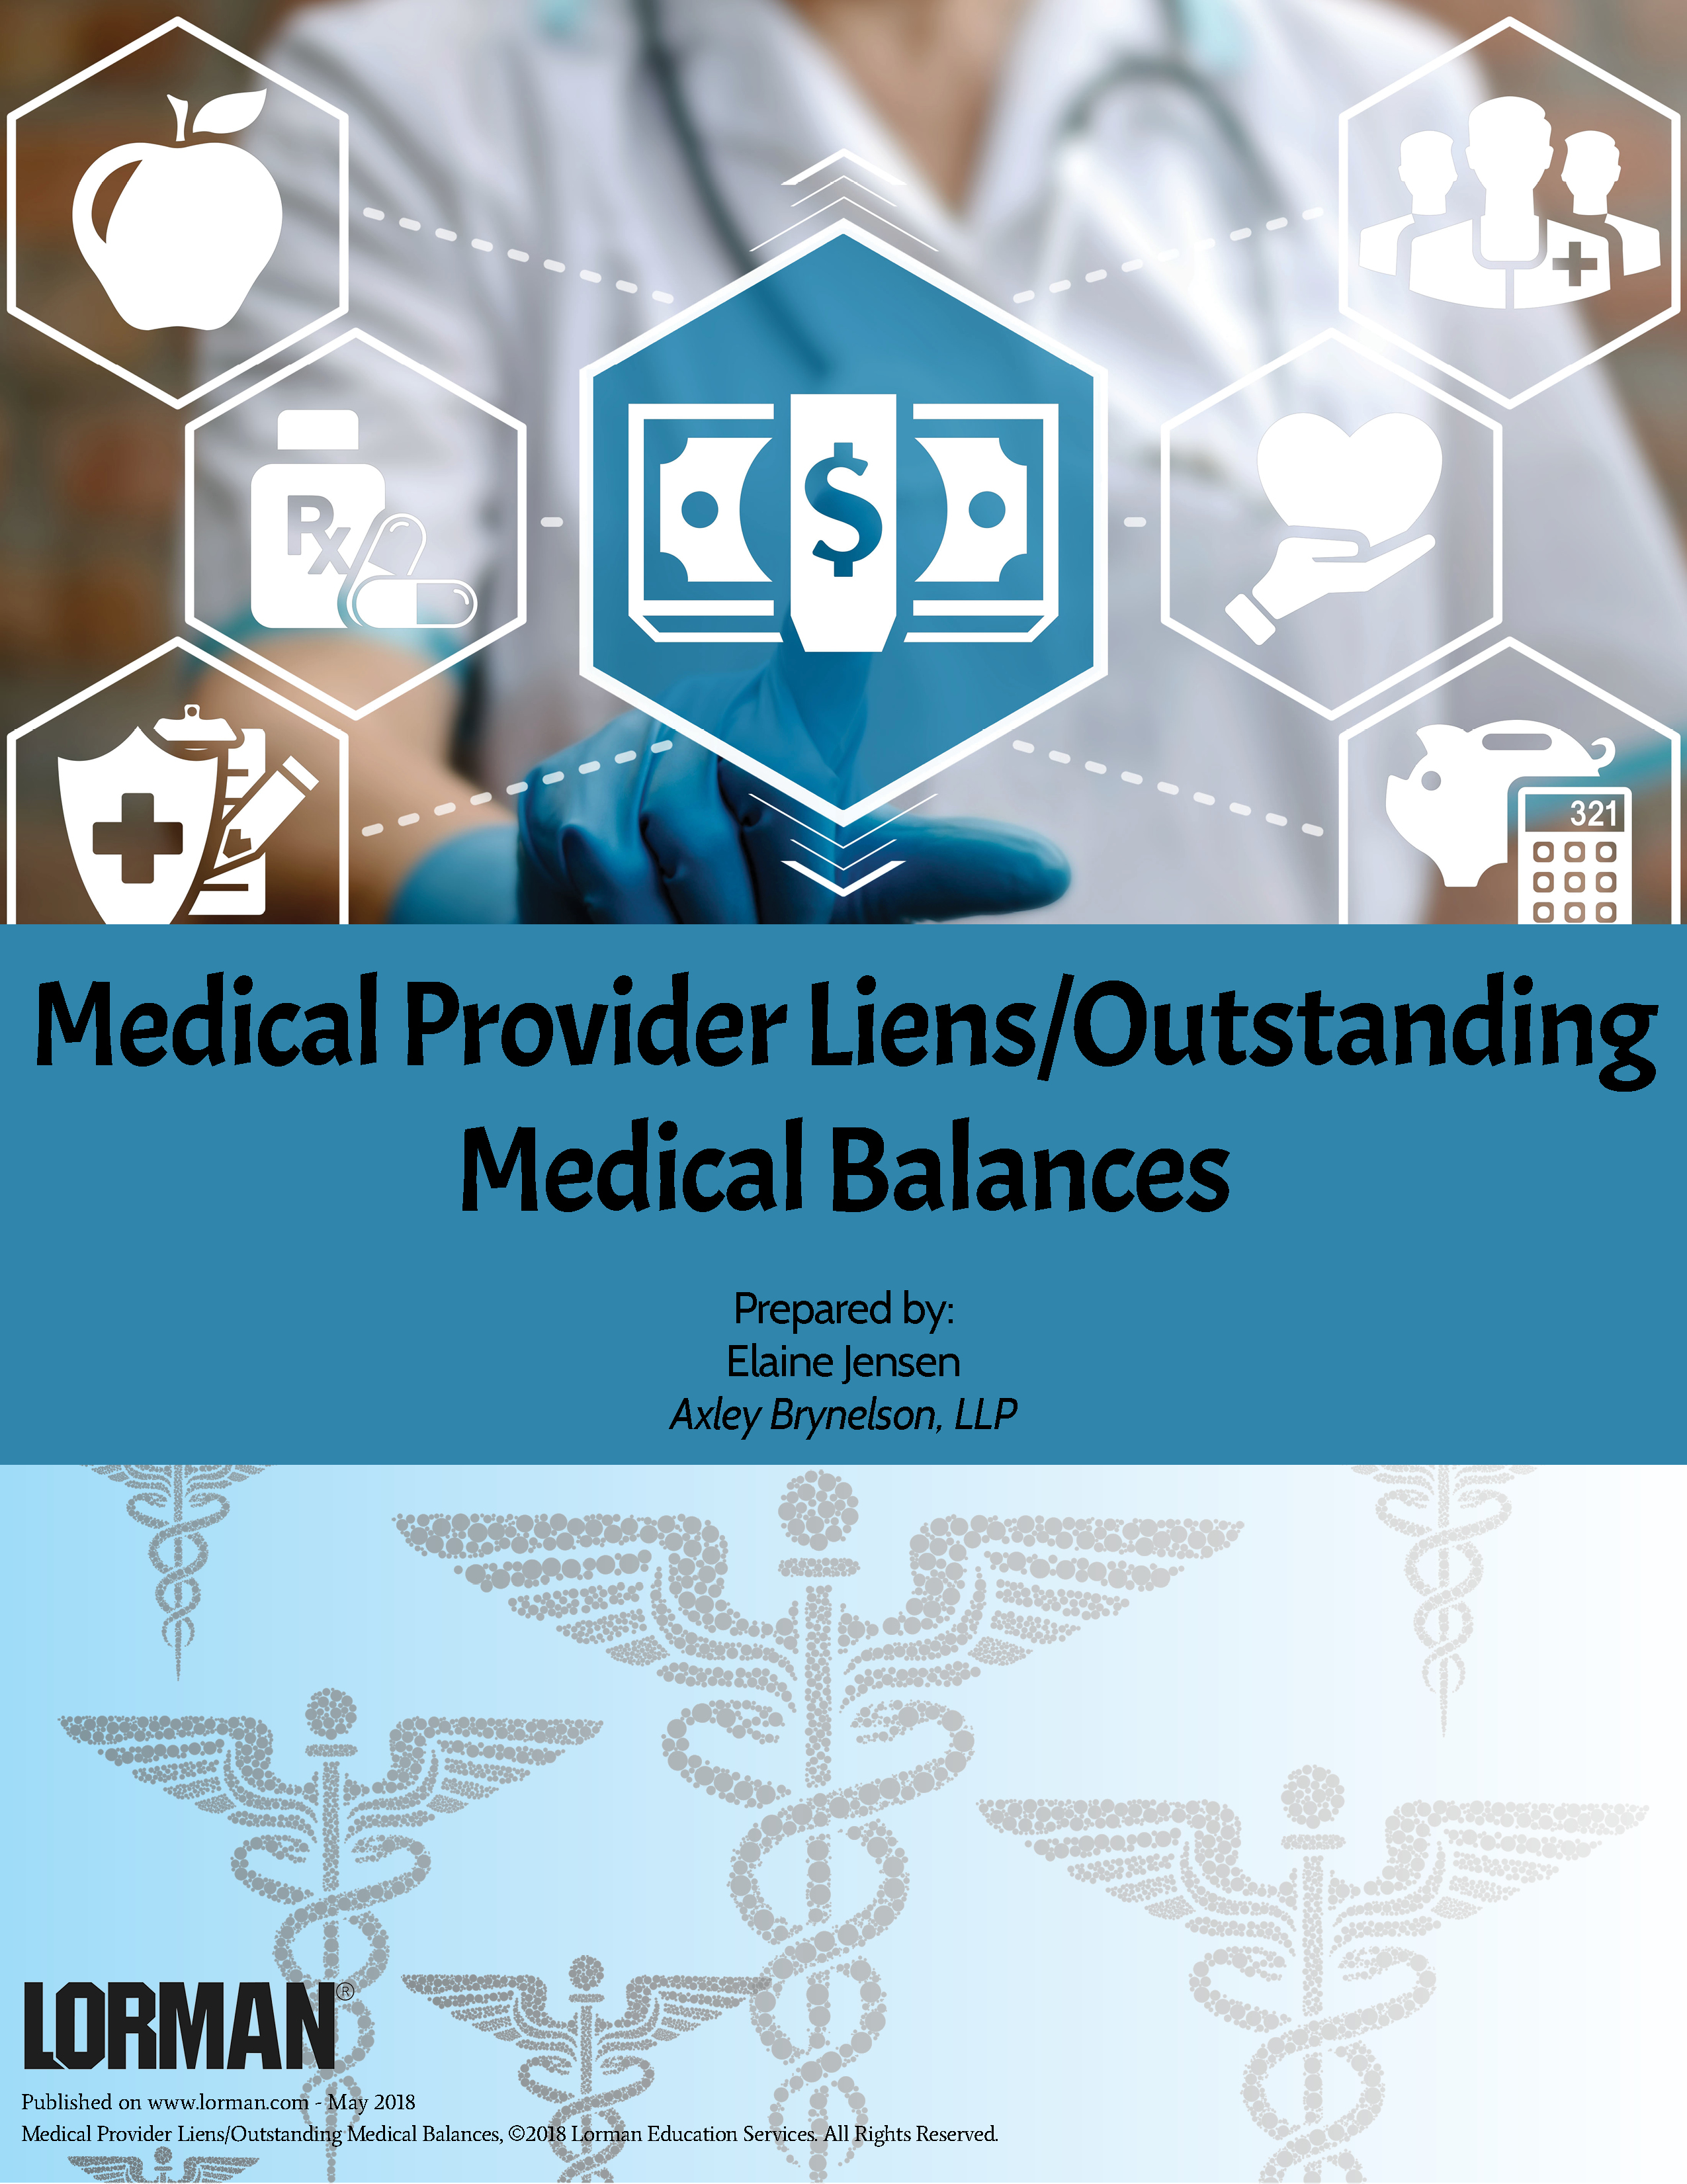 Medical Provider Liens/Outstanding Medical Balances